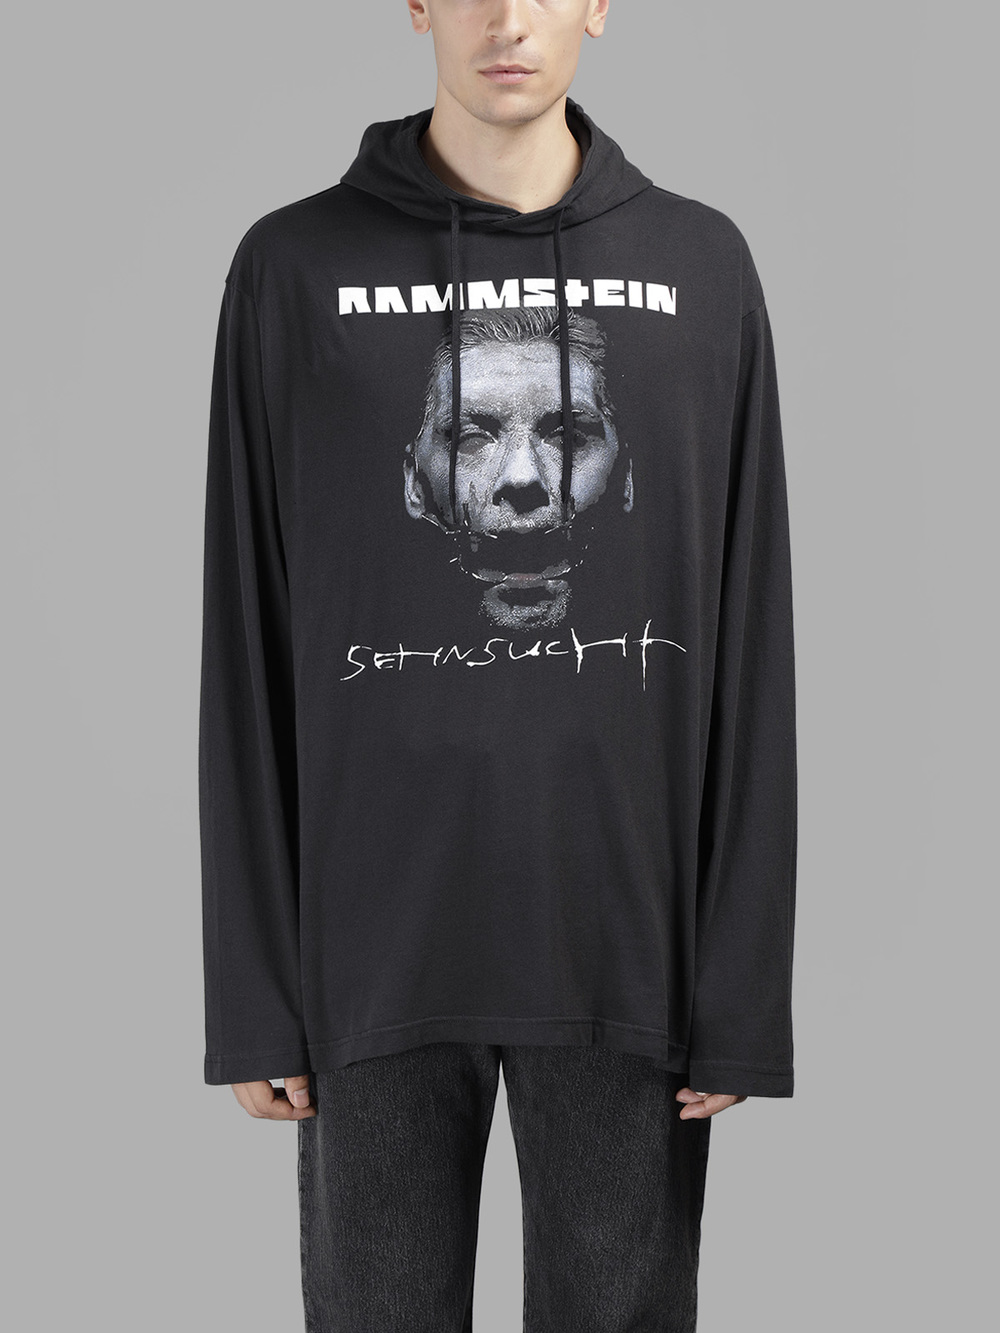 Vetements Release Rammstein Hoodie – PAUSE Online | Men's Fashion